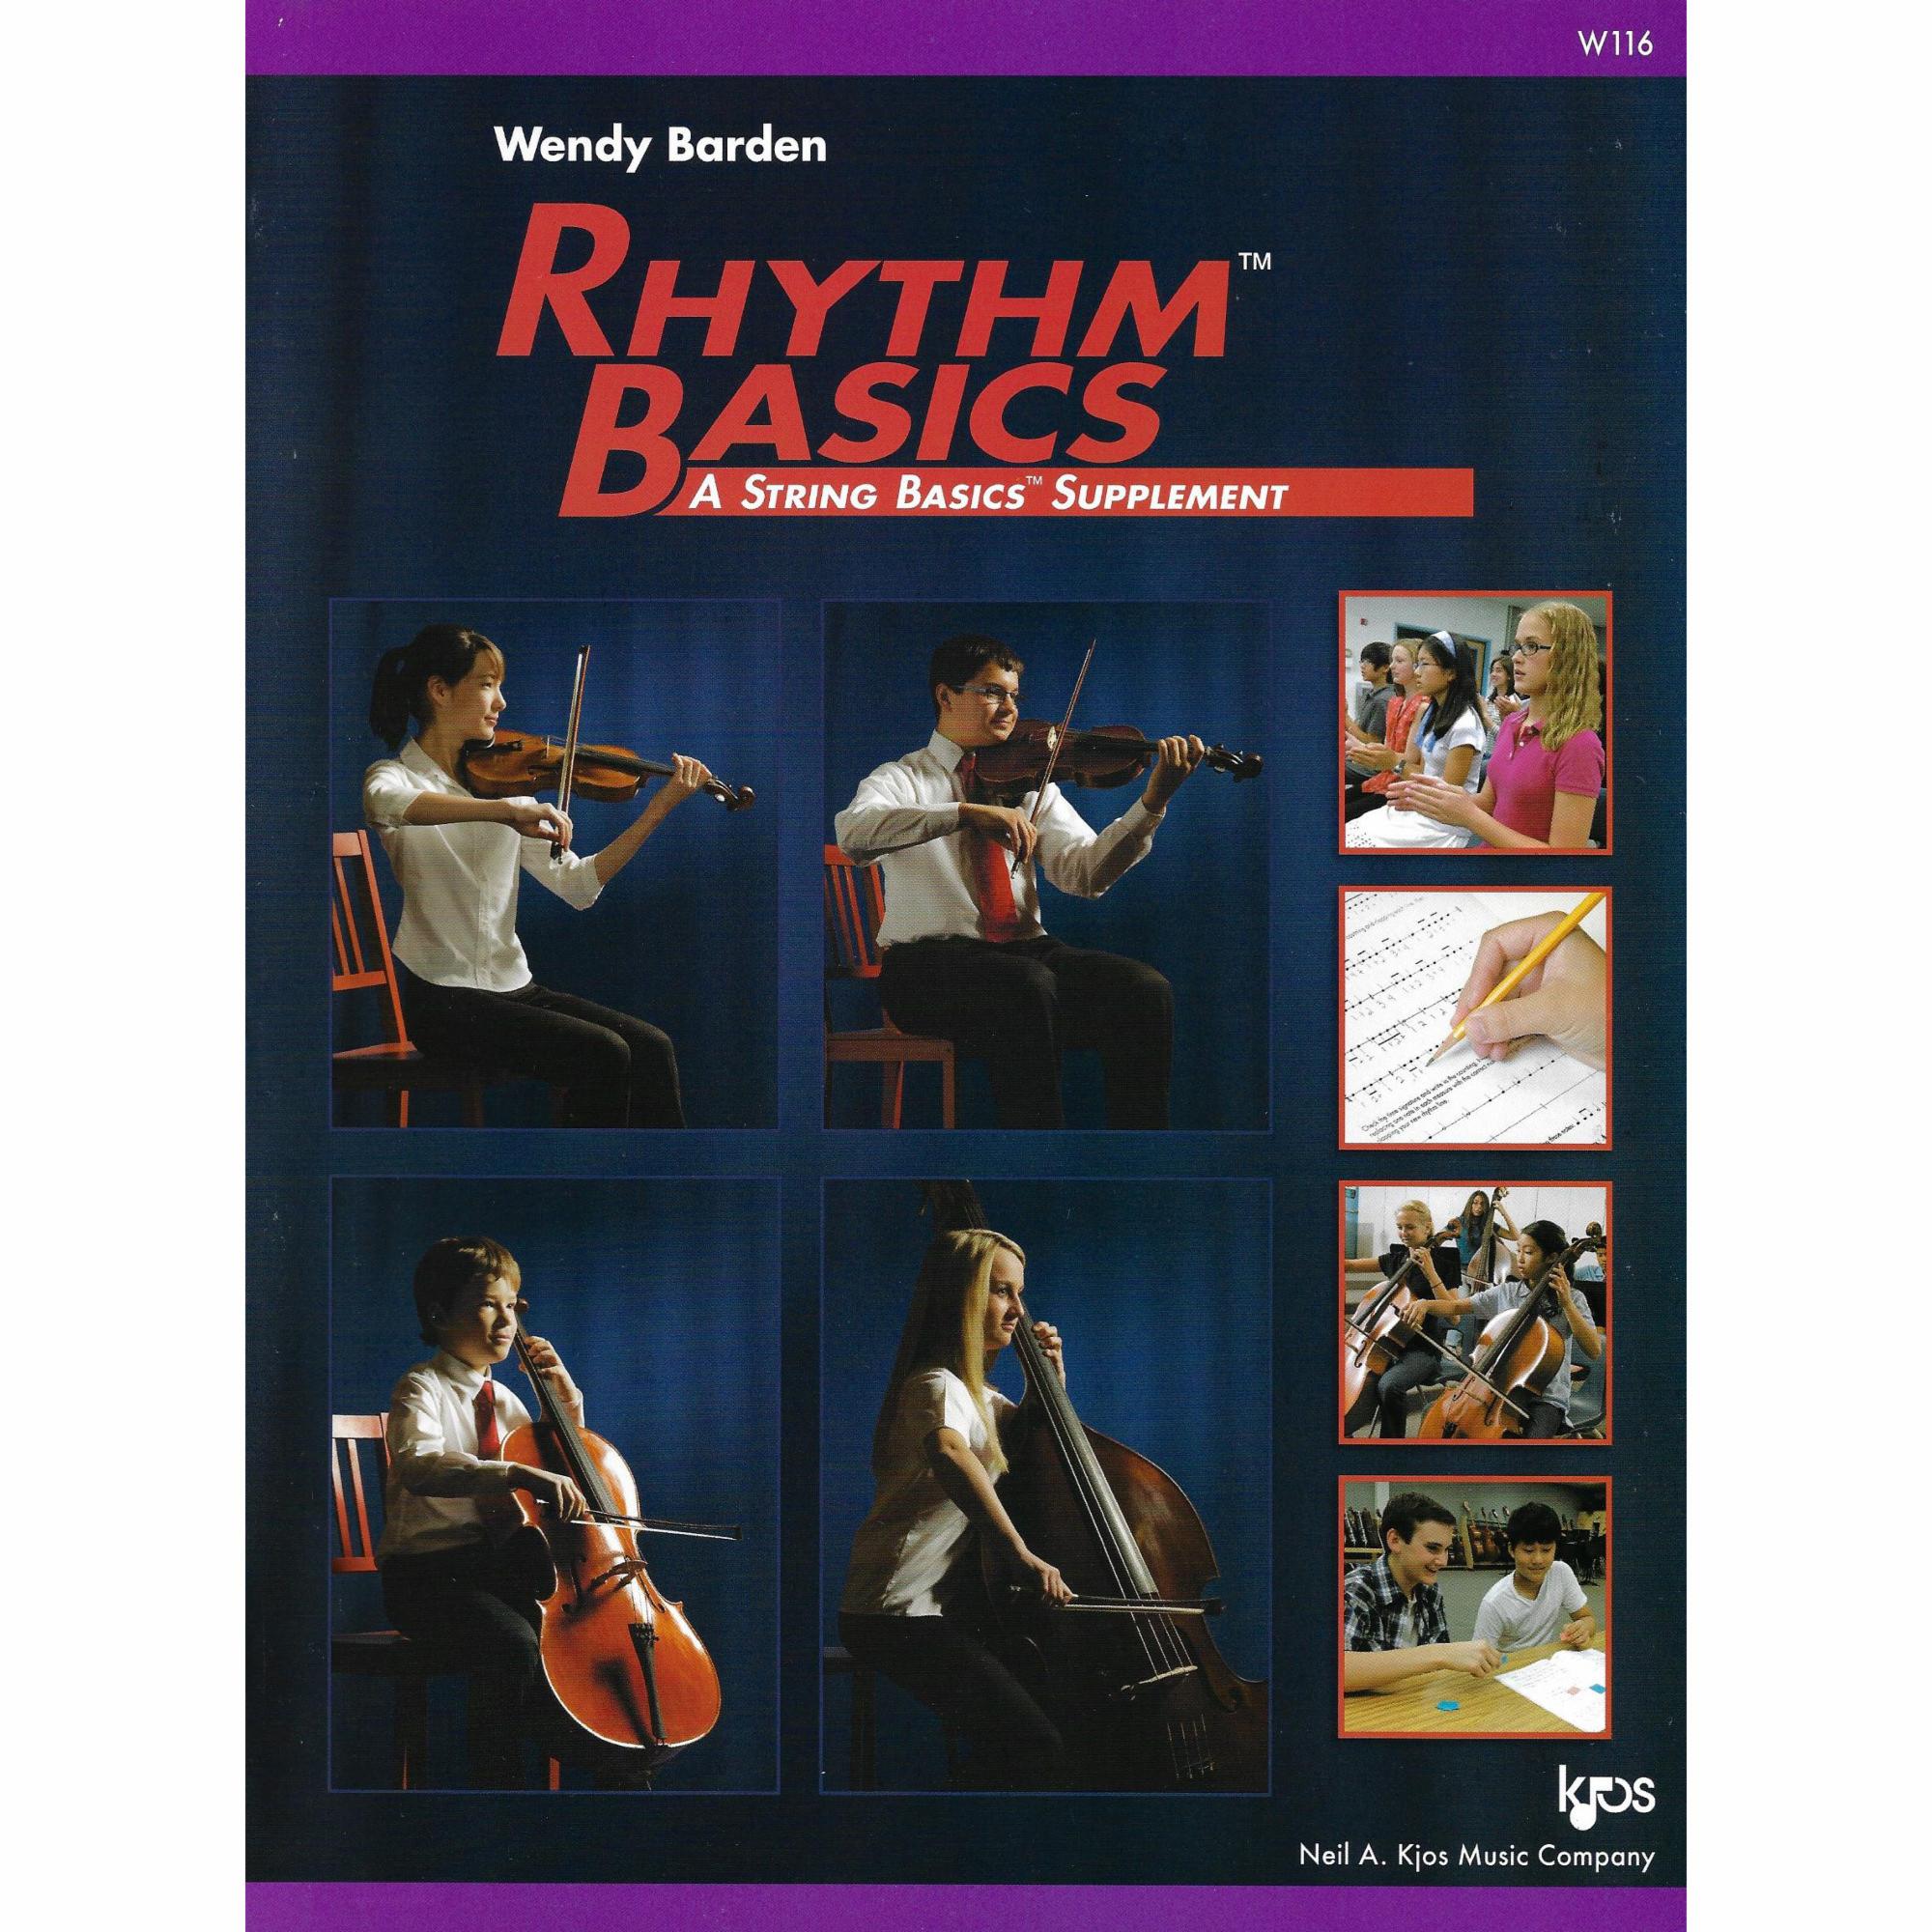 Rhythm Basics: A String Basics Supplement